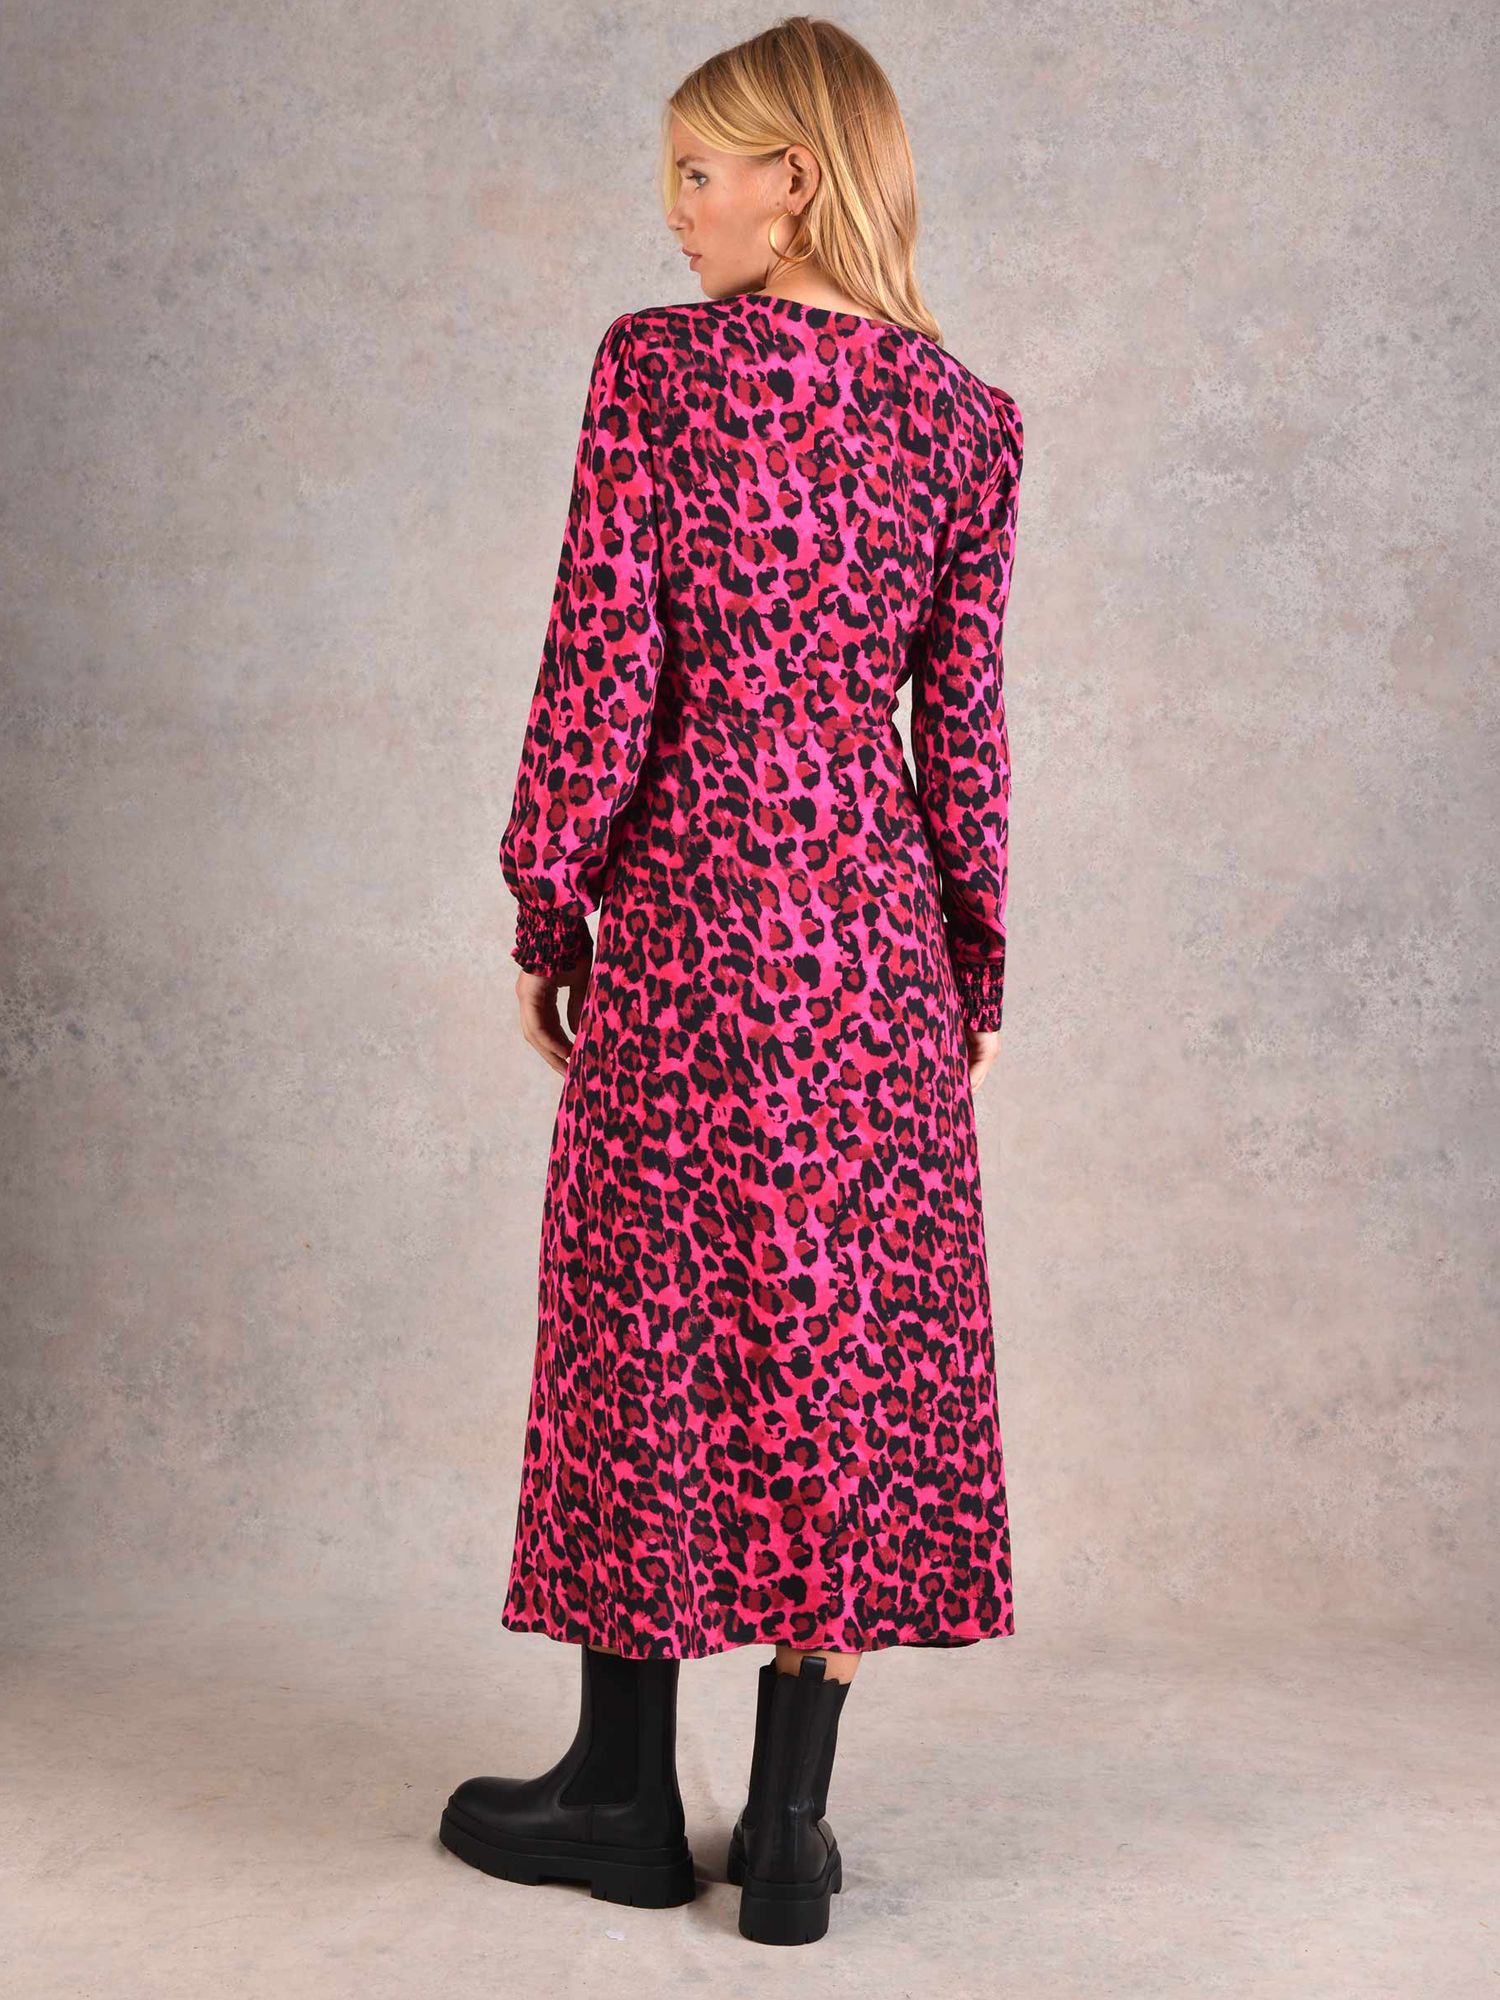 Buy Ro&Zo Leopard Print Tiered Midi Dress, Pink/Black Online at johnlewis.com